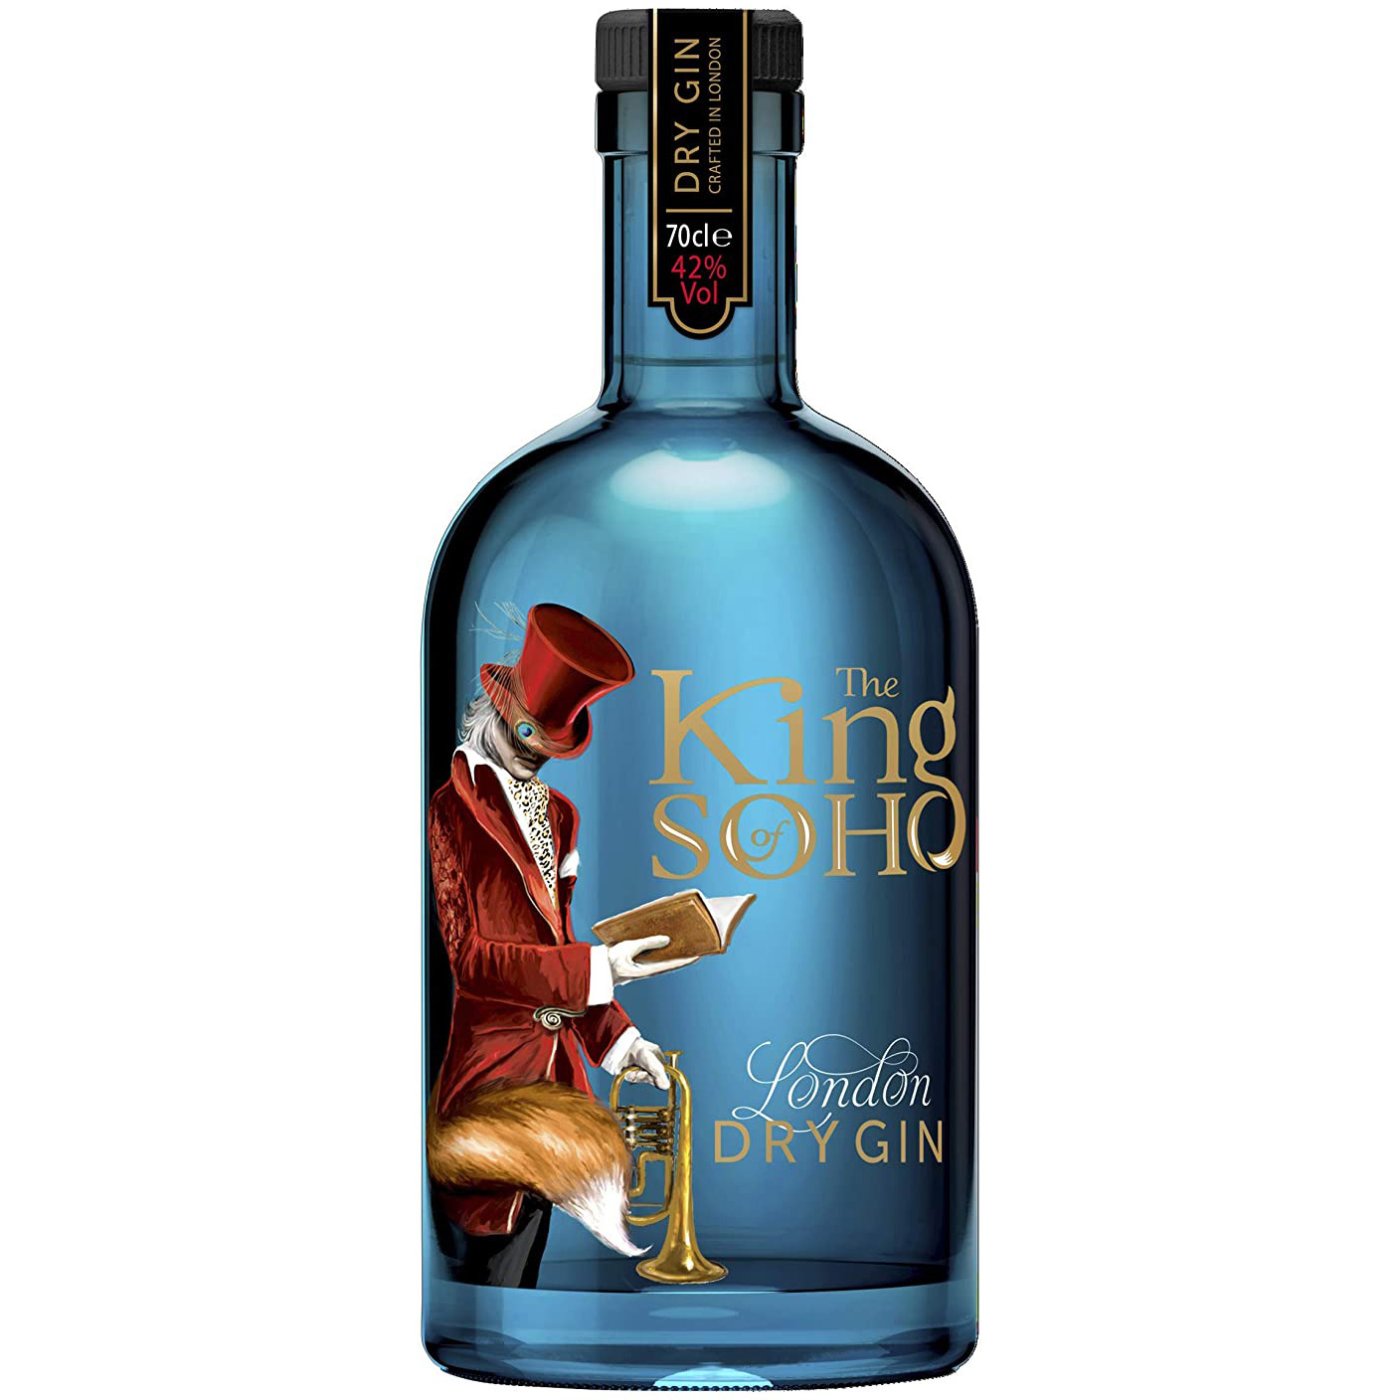 King of Soho - London Dry Gin 70cl